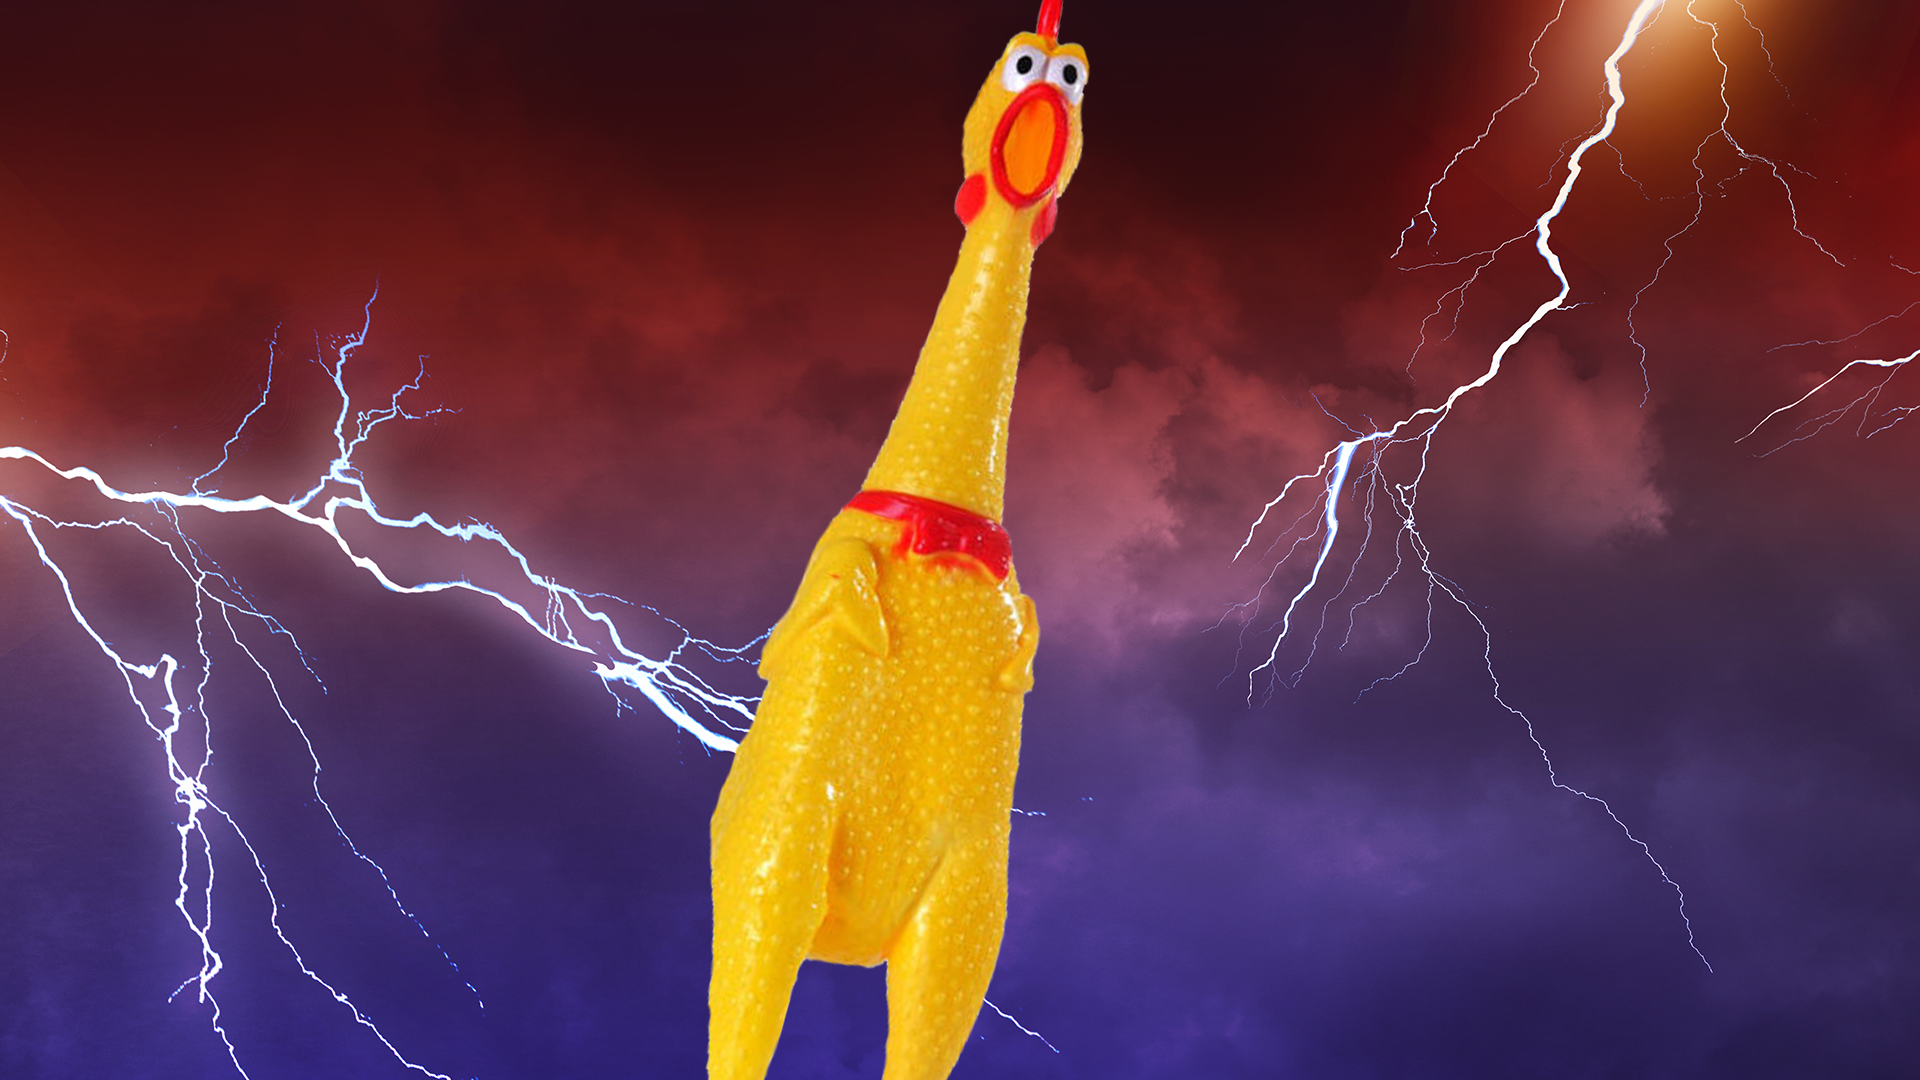 Rubber chicken on lightning background